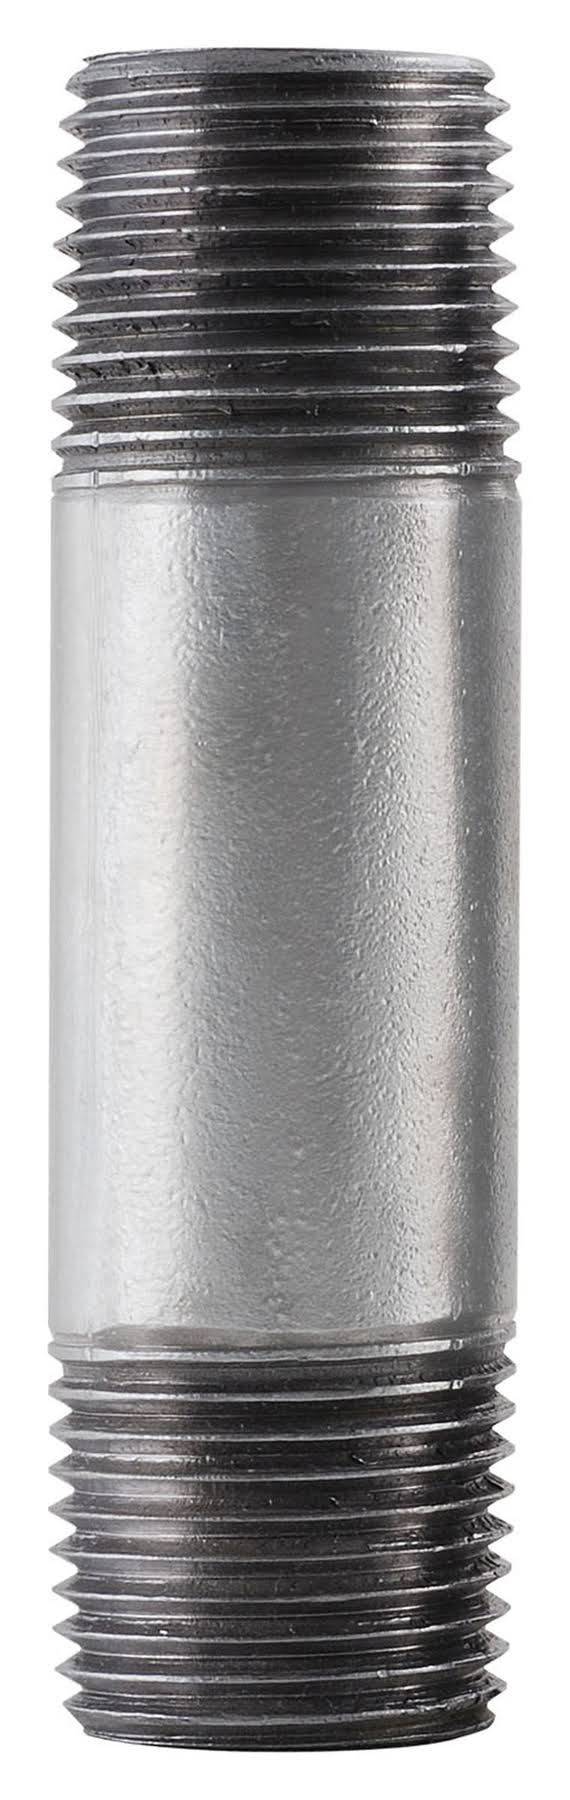 LDR Galvanized Steel Nipple - 1 - 1 2' x 4.5'